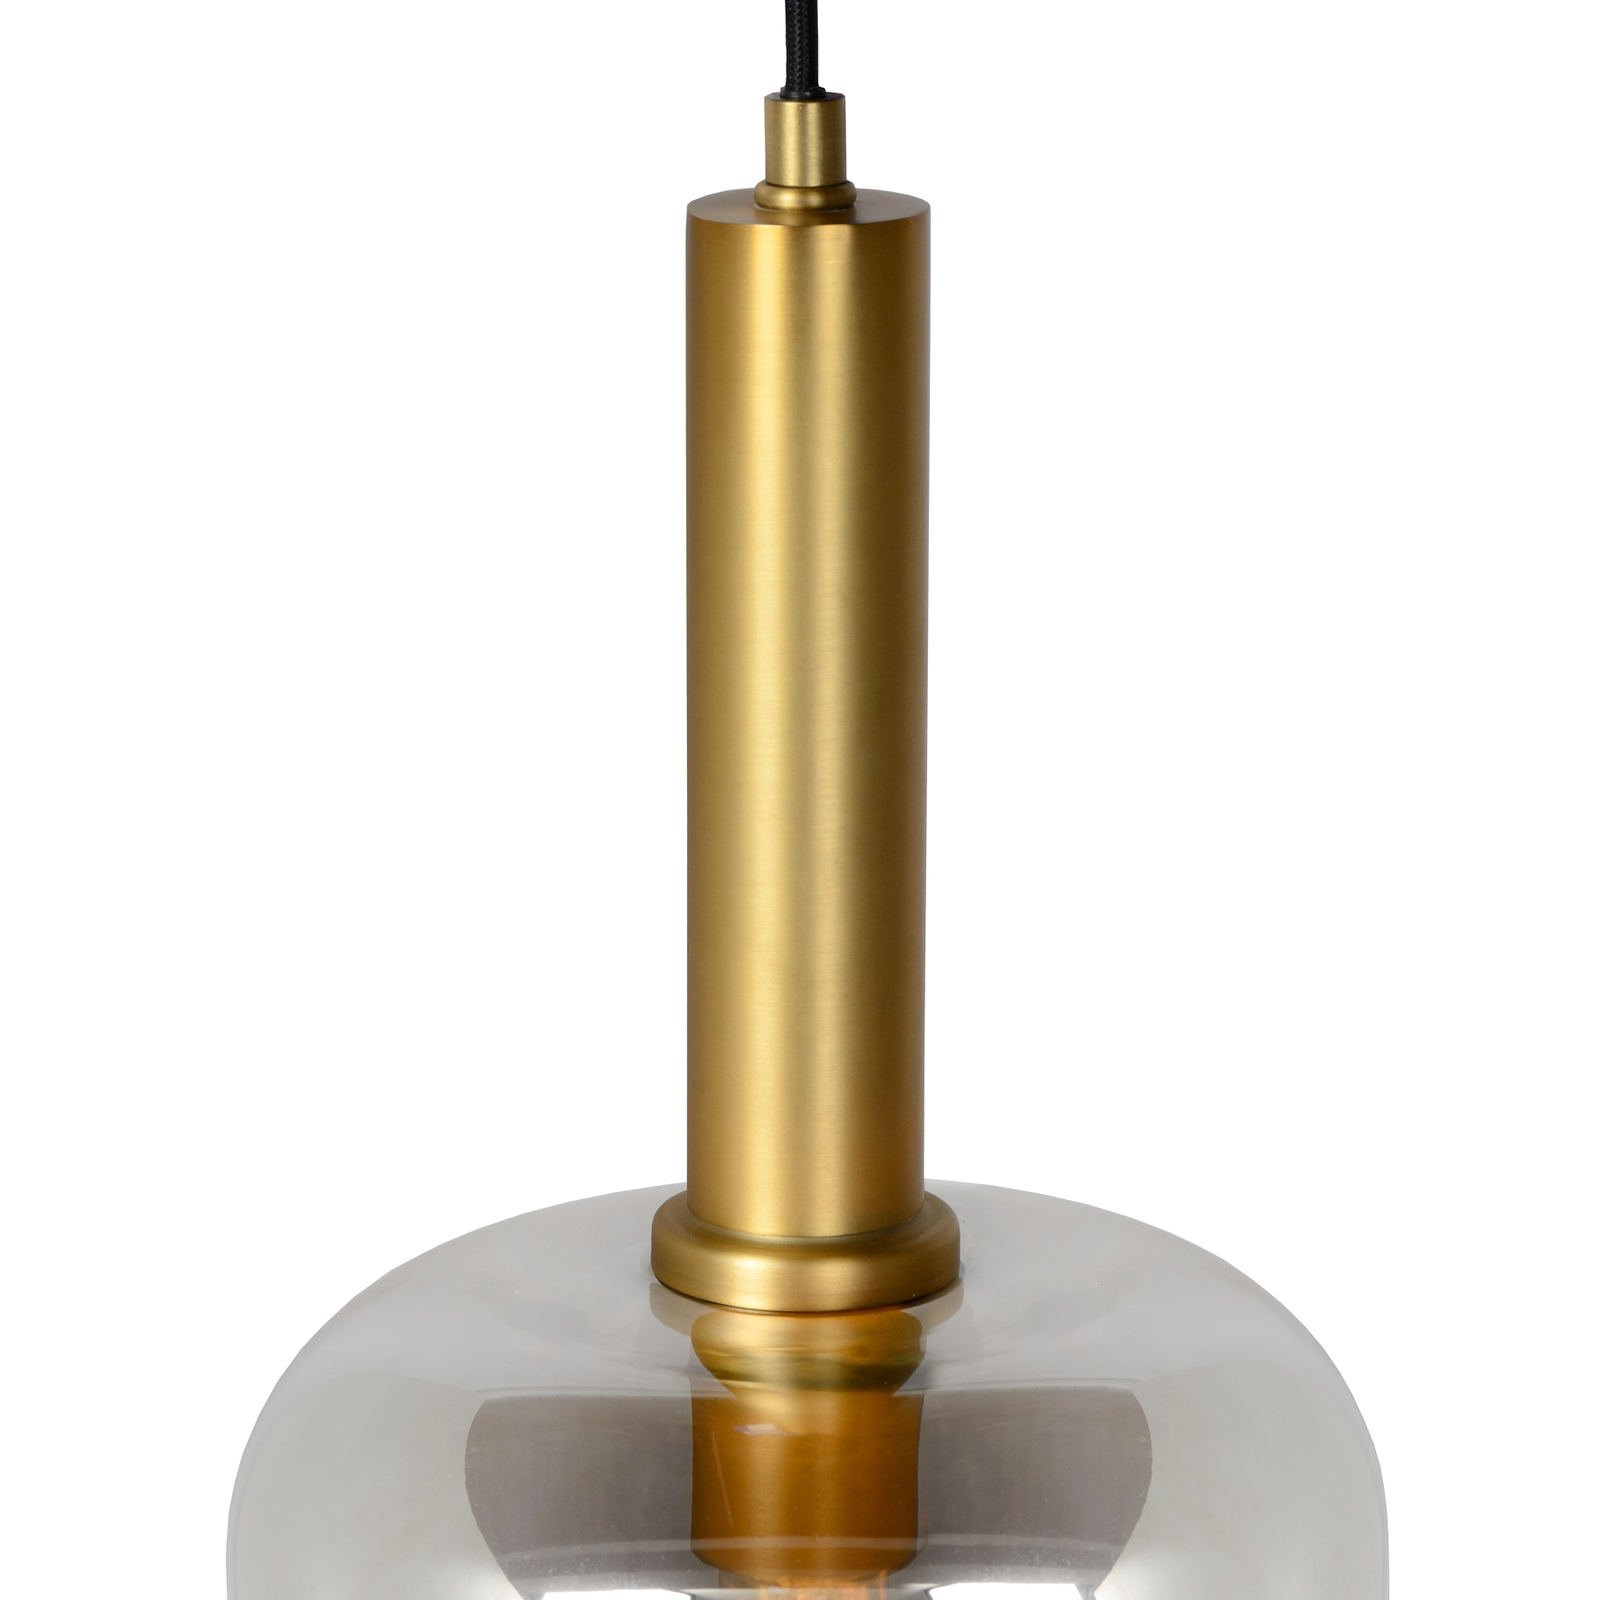 Hanglamp Joanet met rookglas, 1-lamp